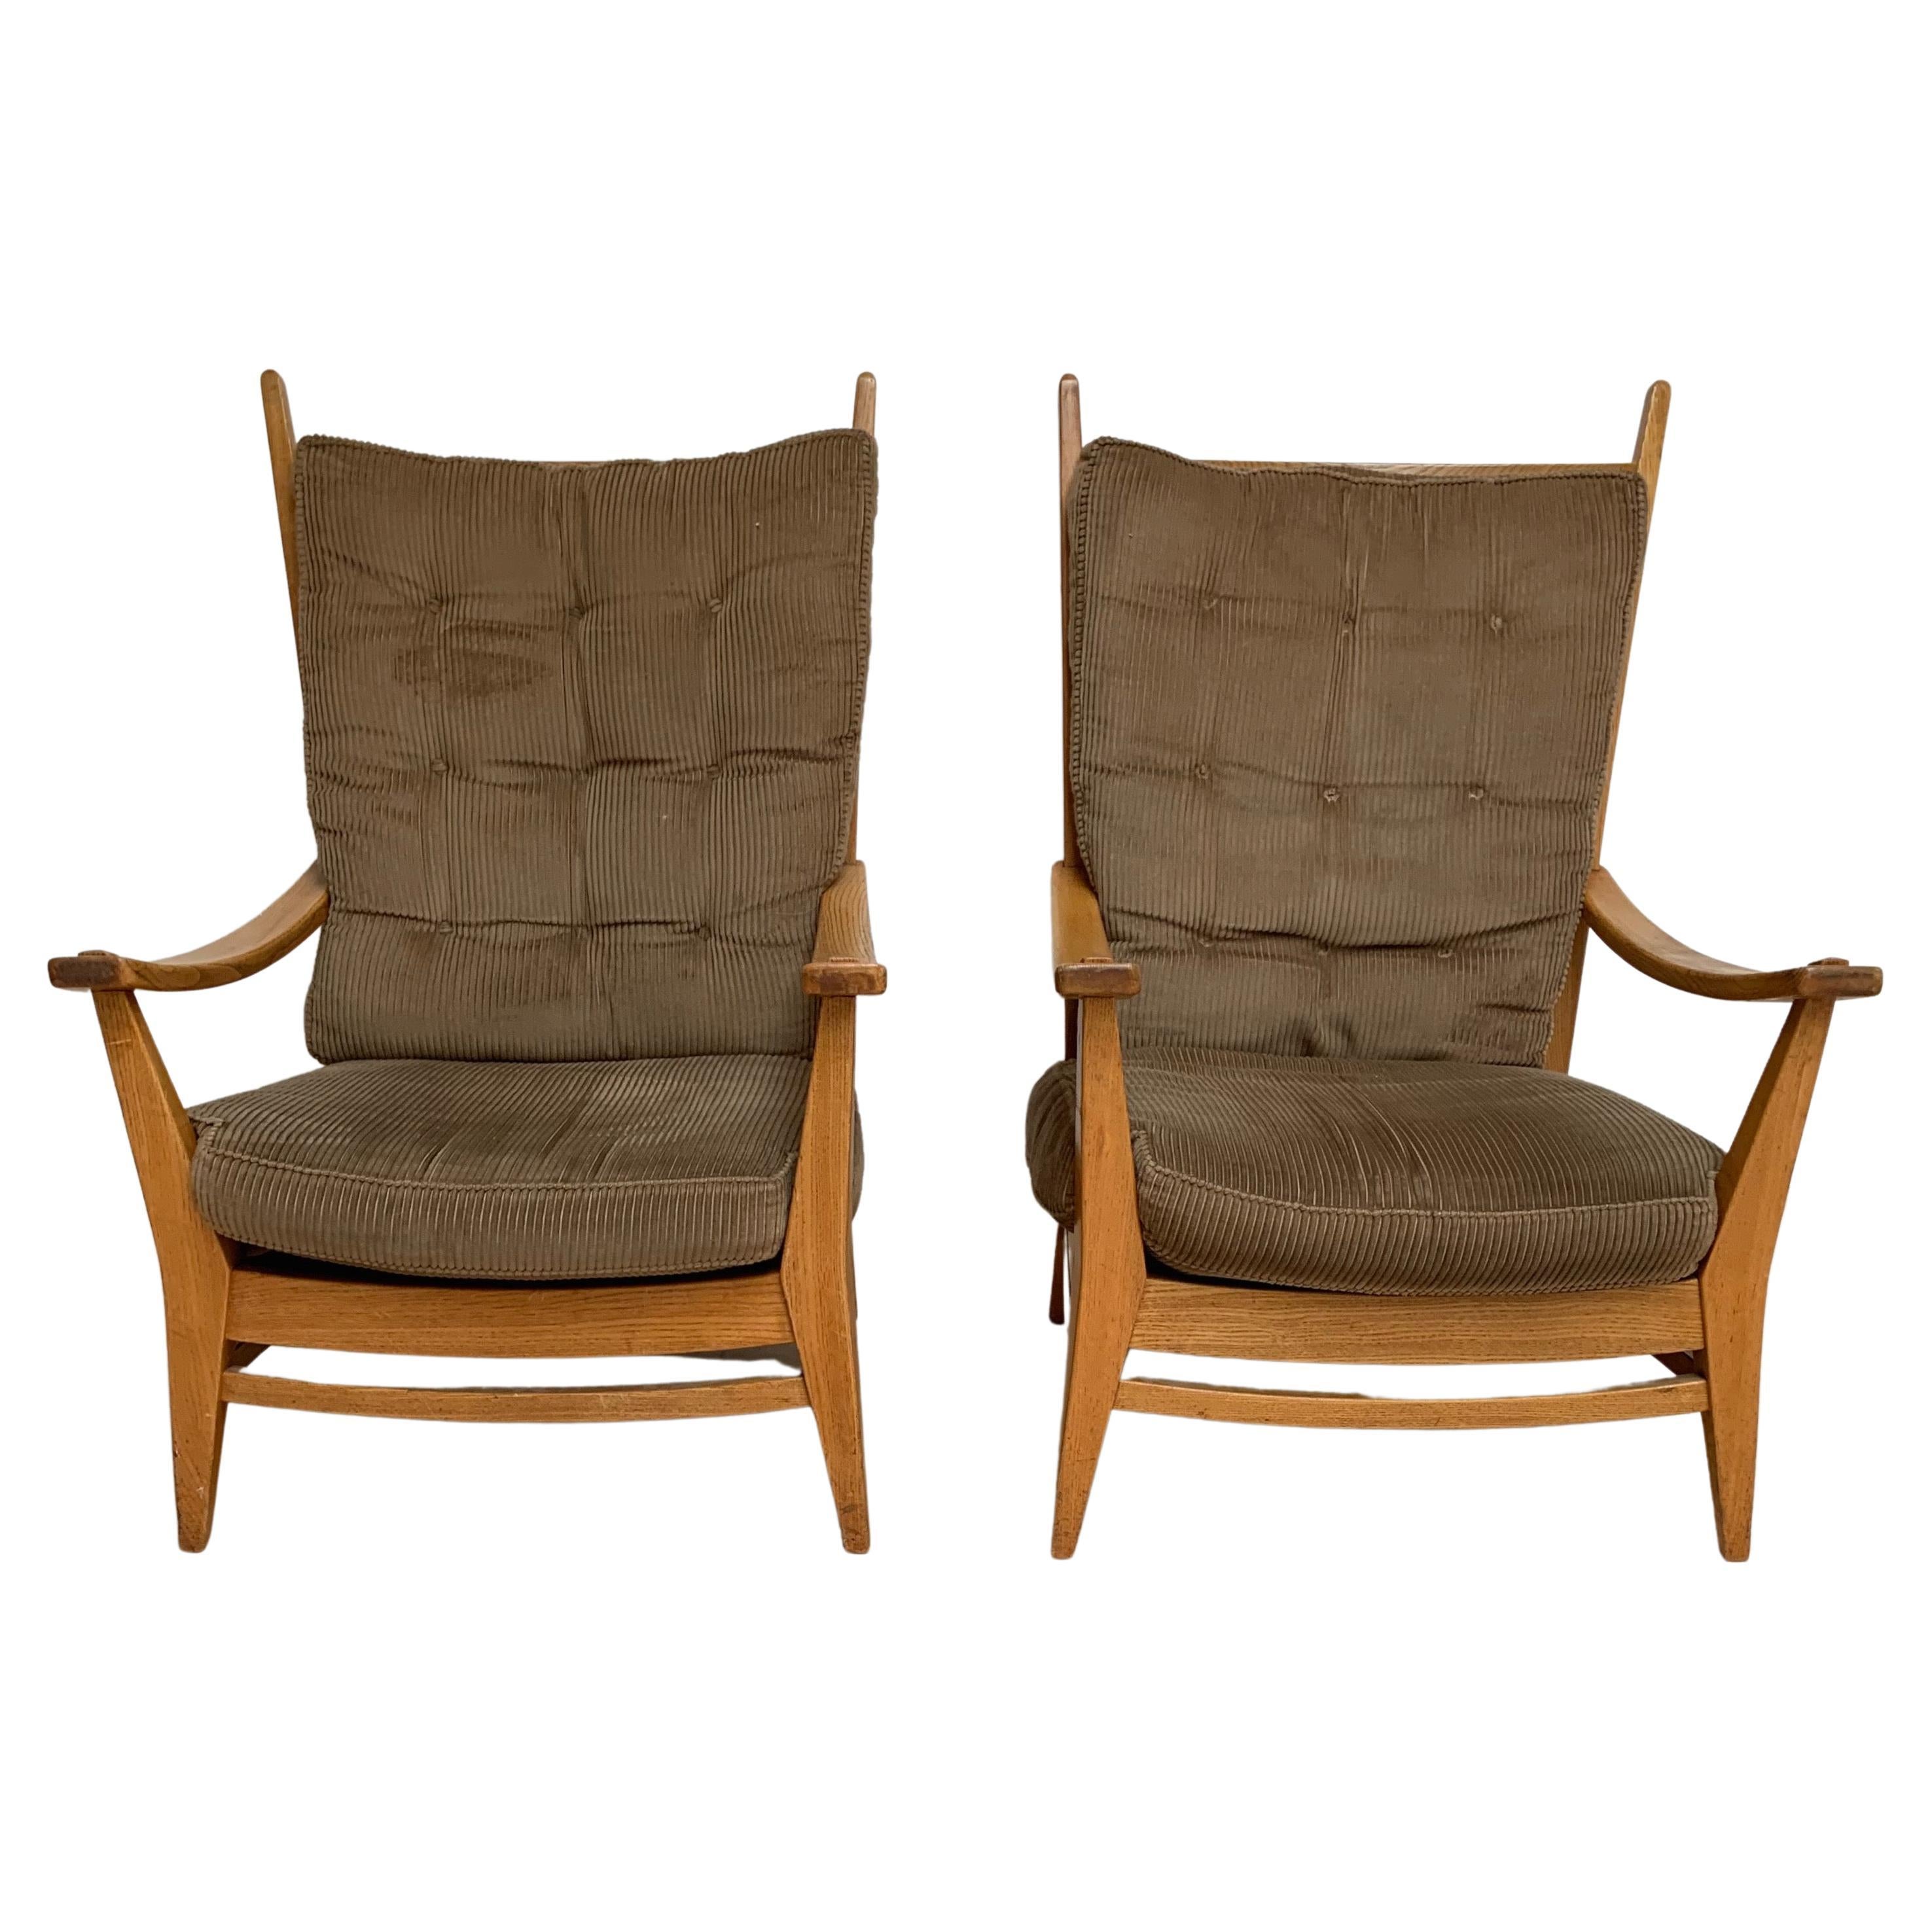 1930-1940, Rare Pair of Modernist Design Oak Lounge Chairs by Bas Van Pelt